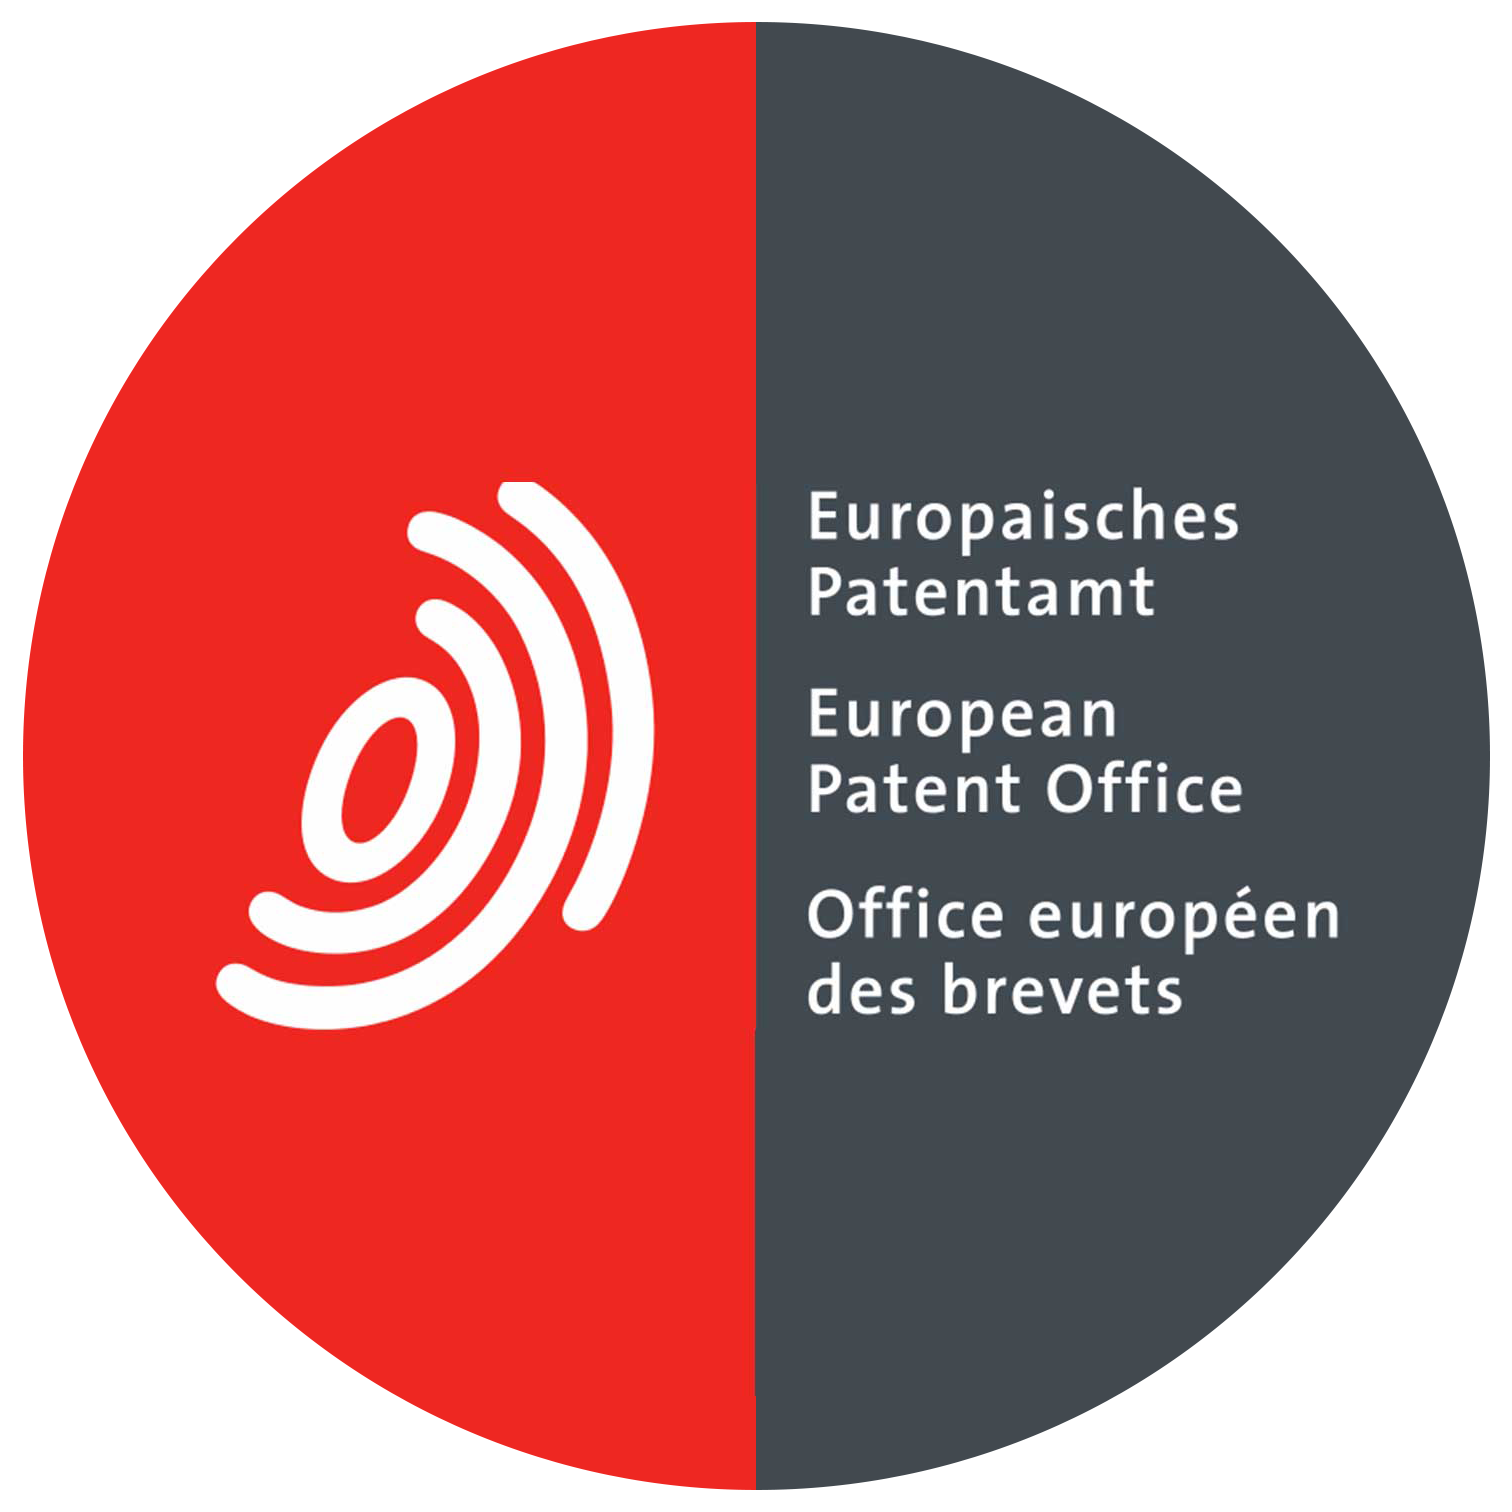 EPO - European Patent Office - Европейское патентное ведомство